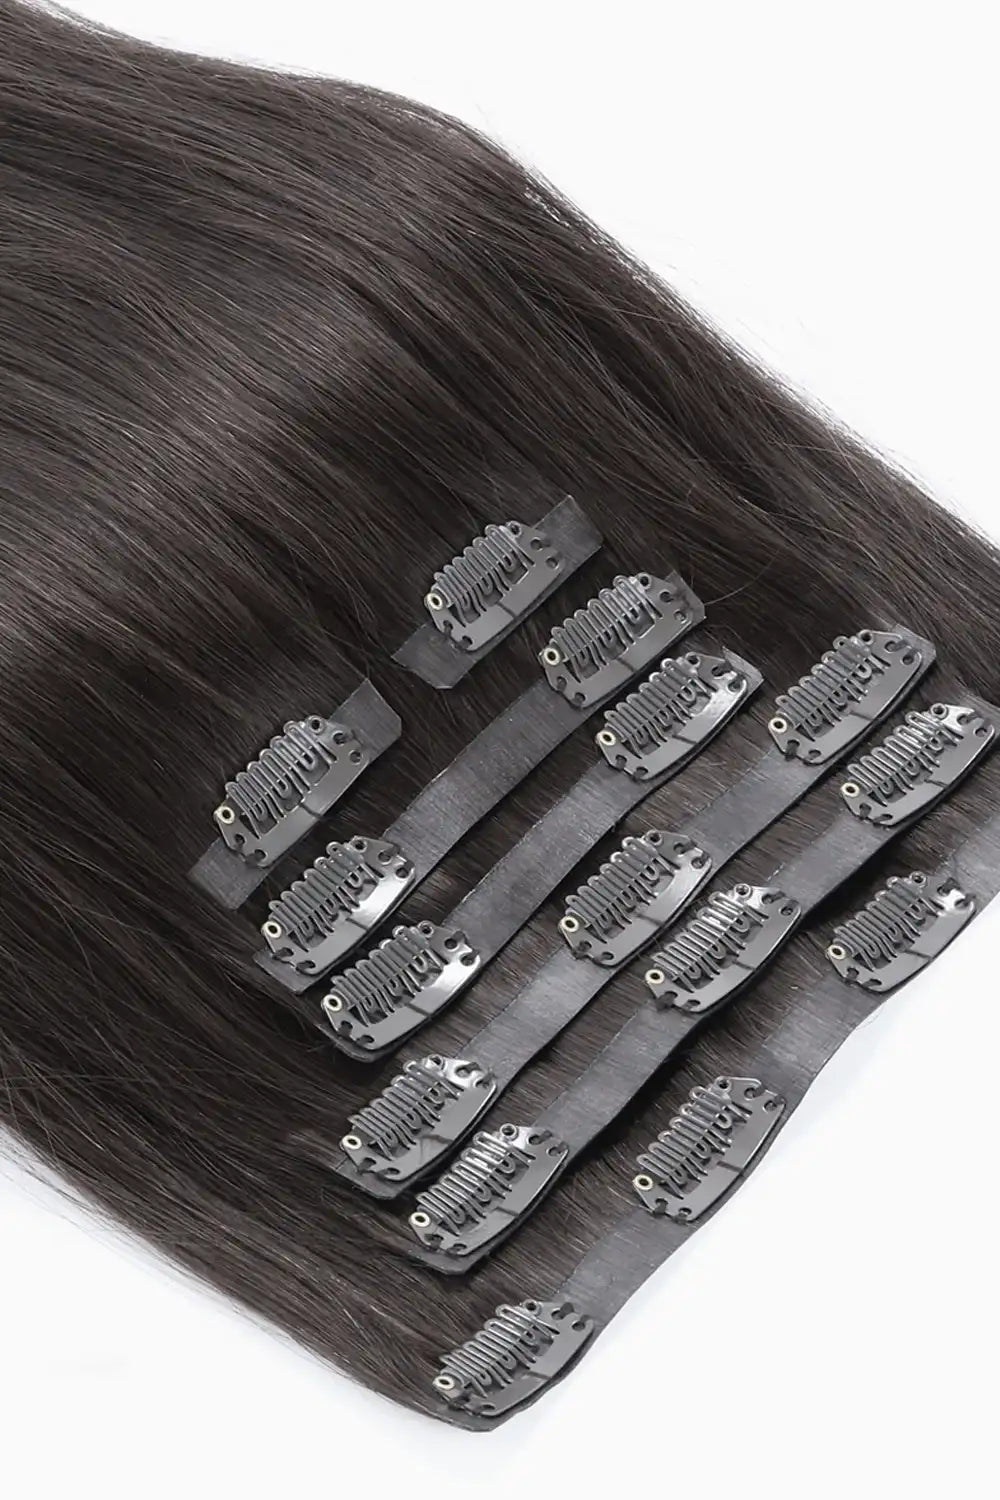 Light YaKi Seamless Clip in Hair Extensions Natural Black 7 Pcs